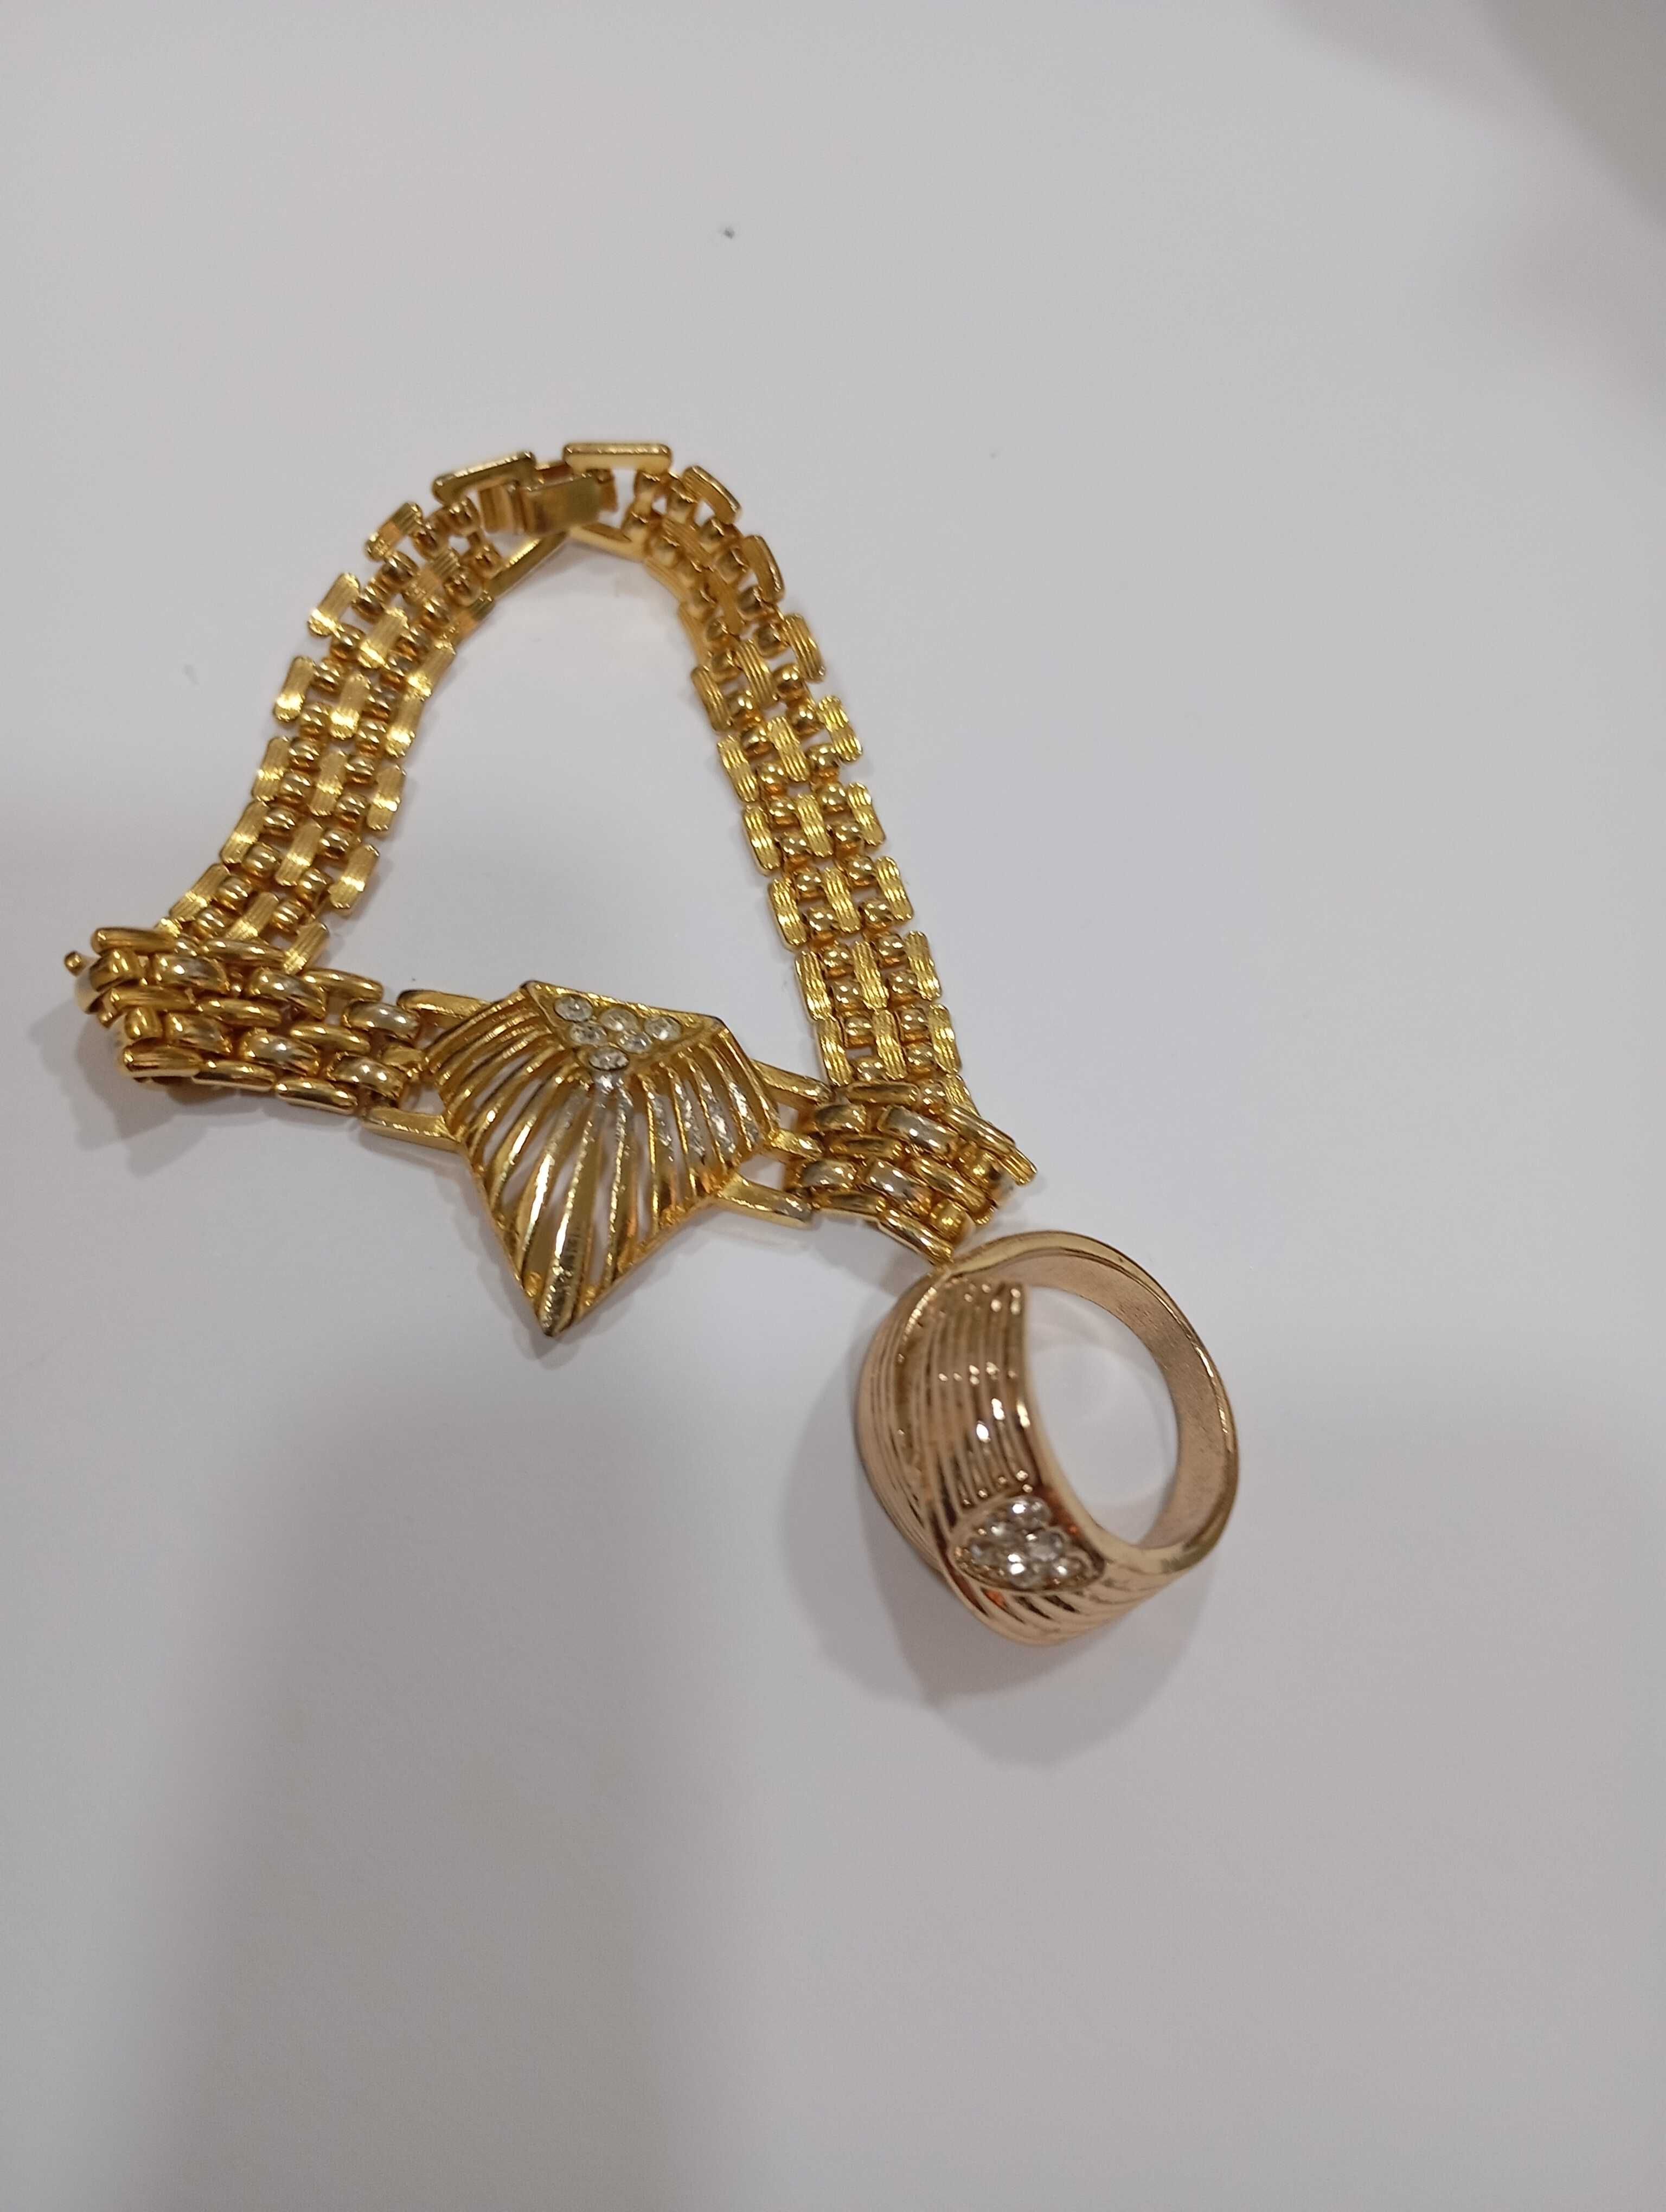 15€ pulseira e anel banhado a ouro 18k entrego em rio tinto